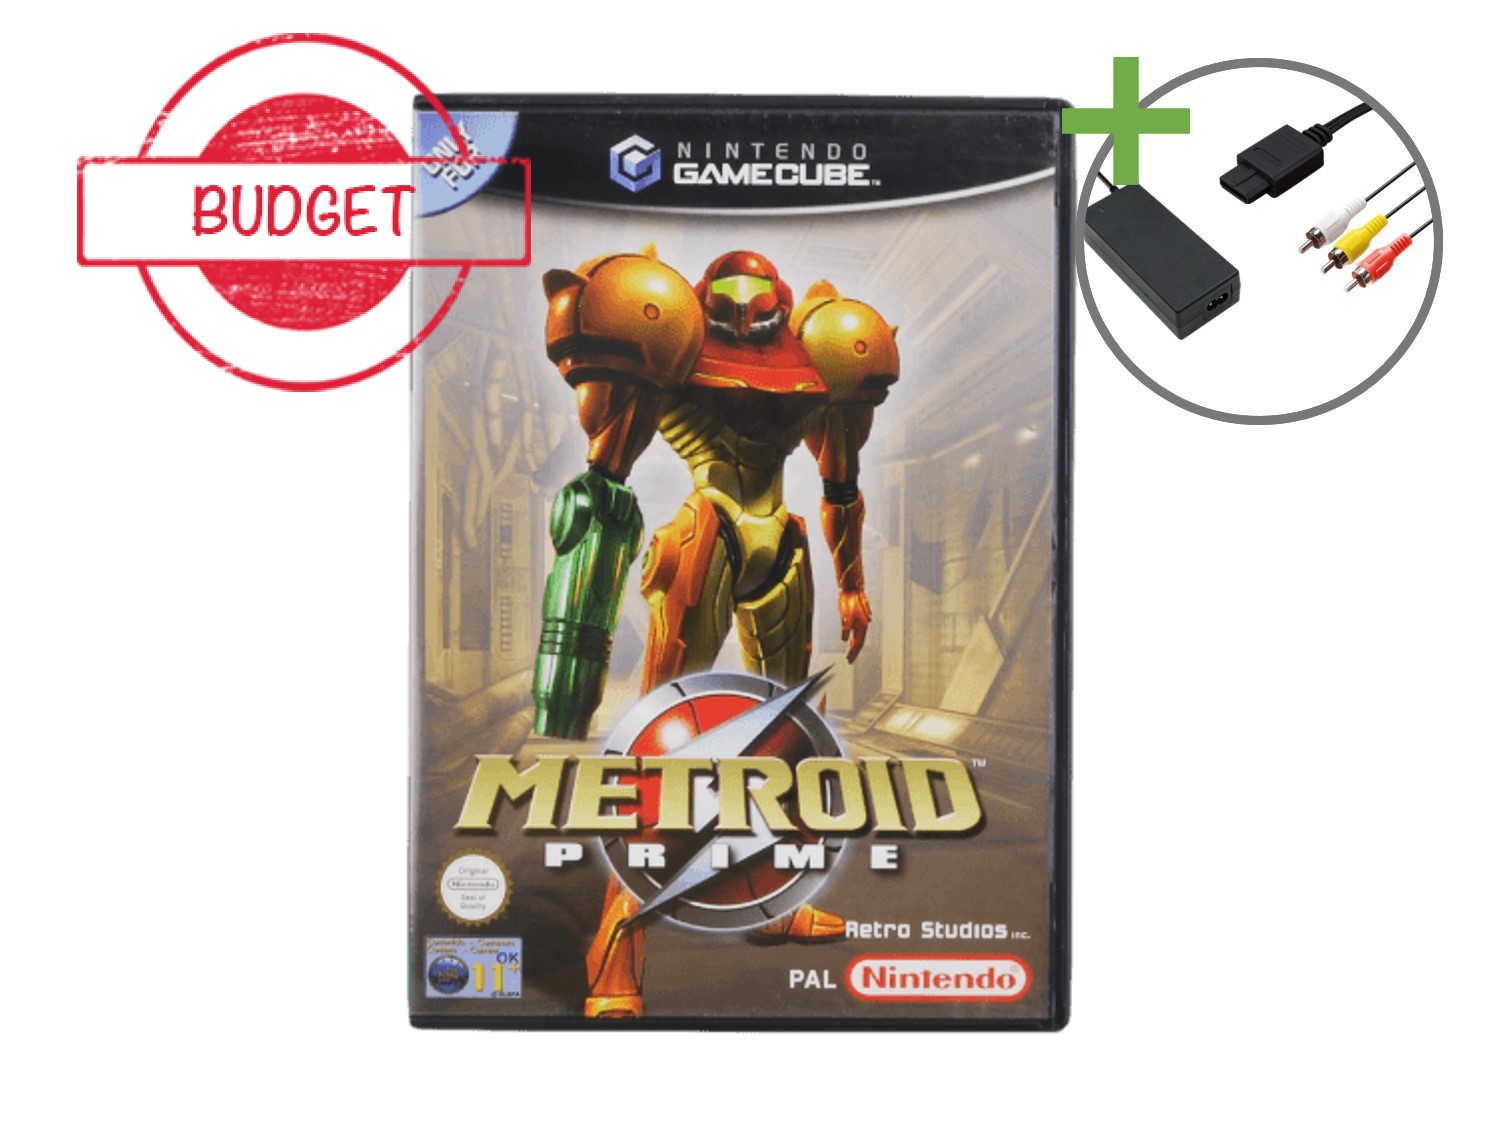 Nintendo Gamecube Starter Pack - Metroid Prime Pack - Budget - Gamecube Hardware - 4